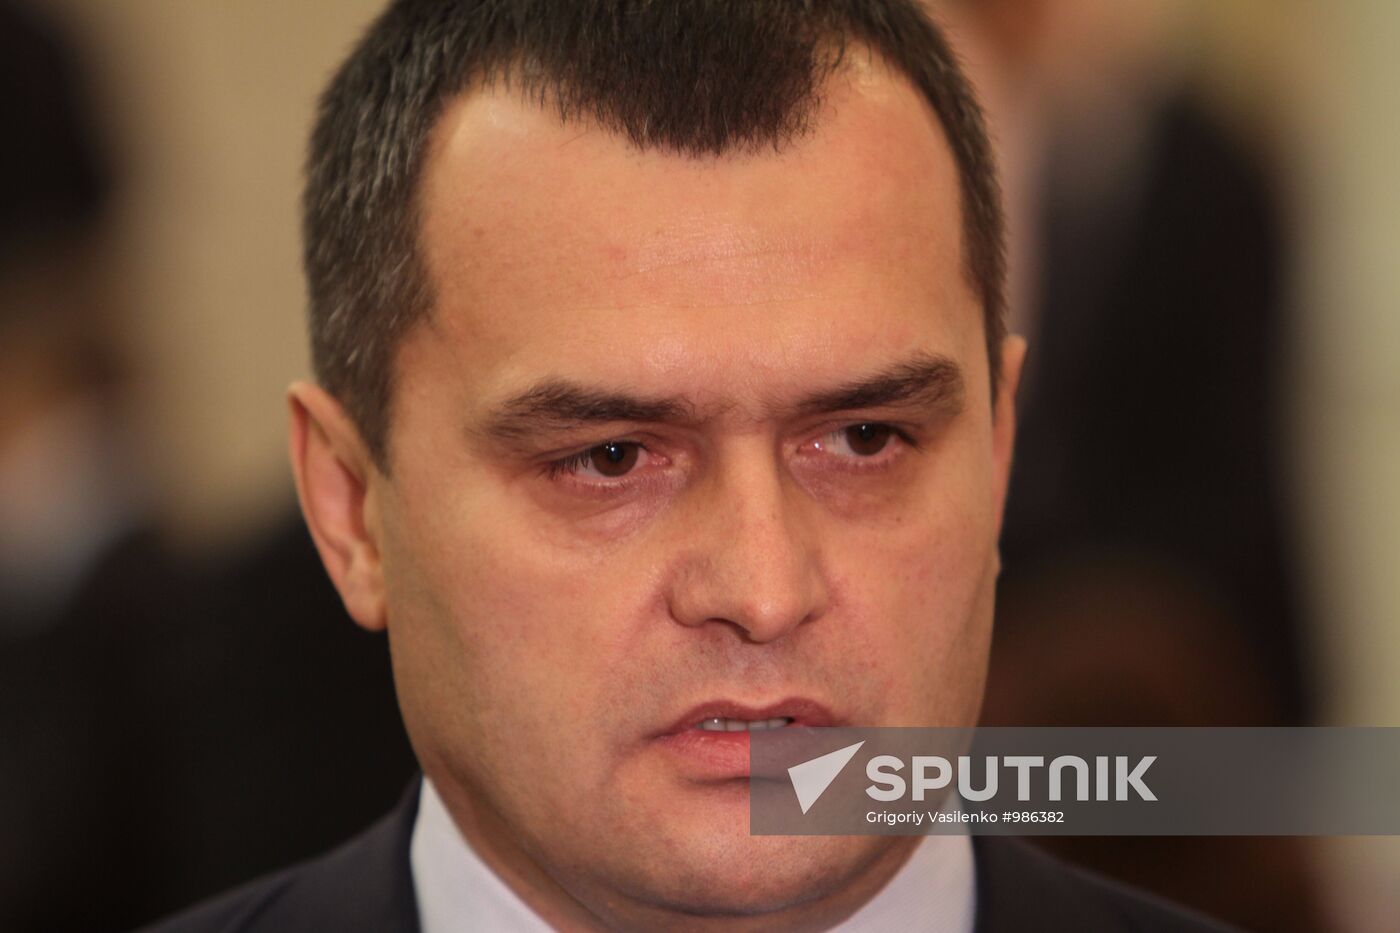 Newly appointed Ukrainian Interior Minister Vitaly Zakharchenko